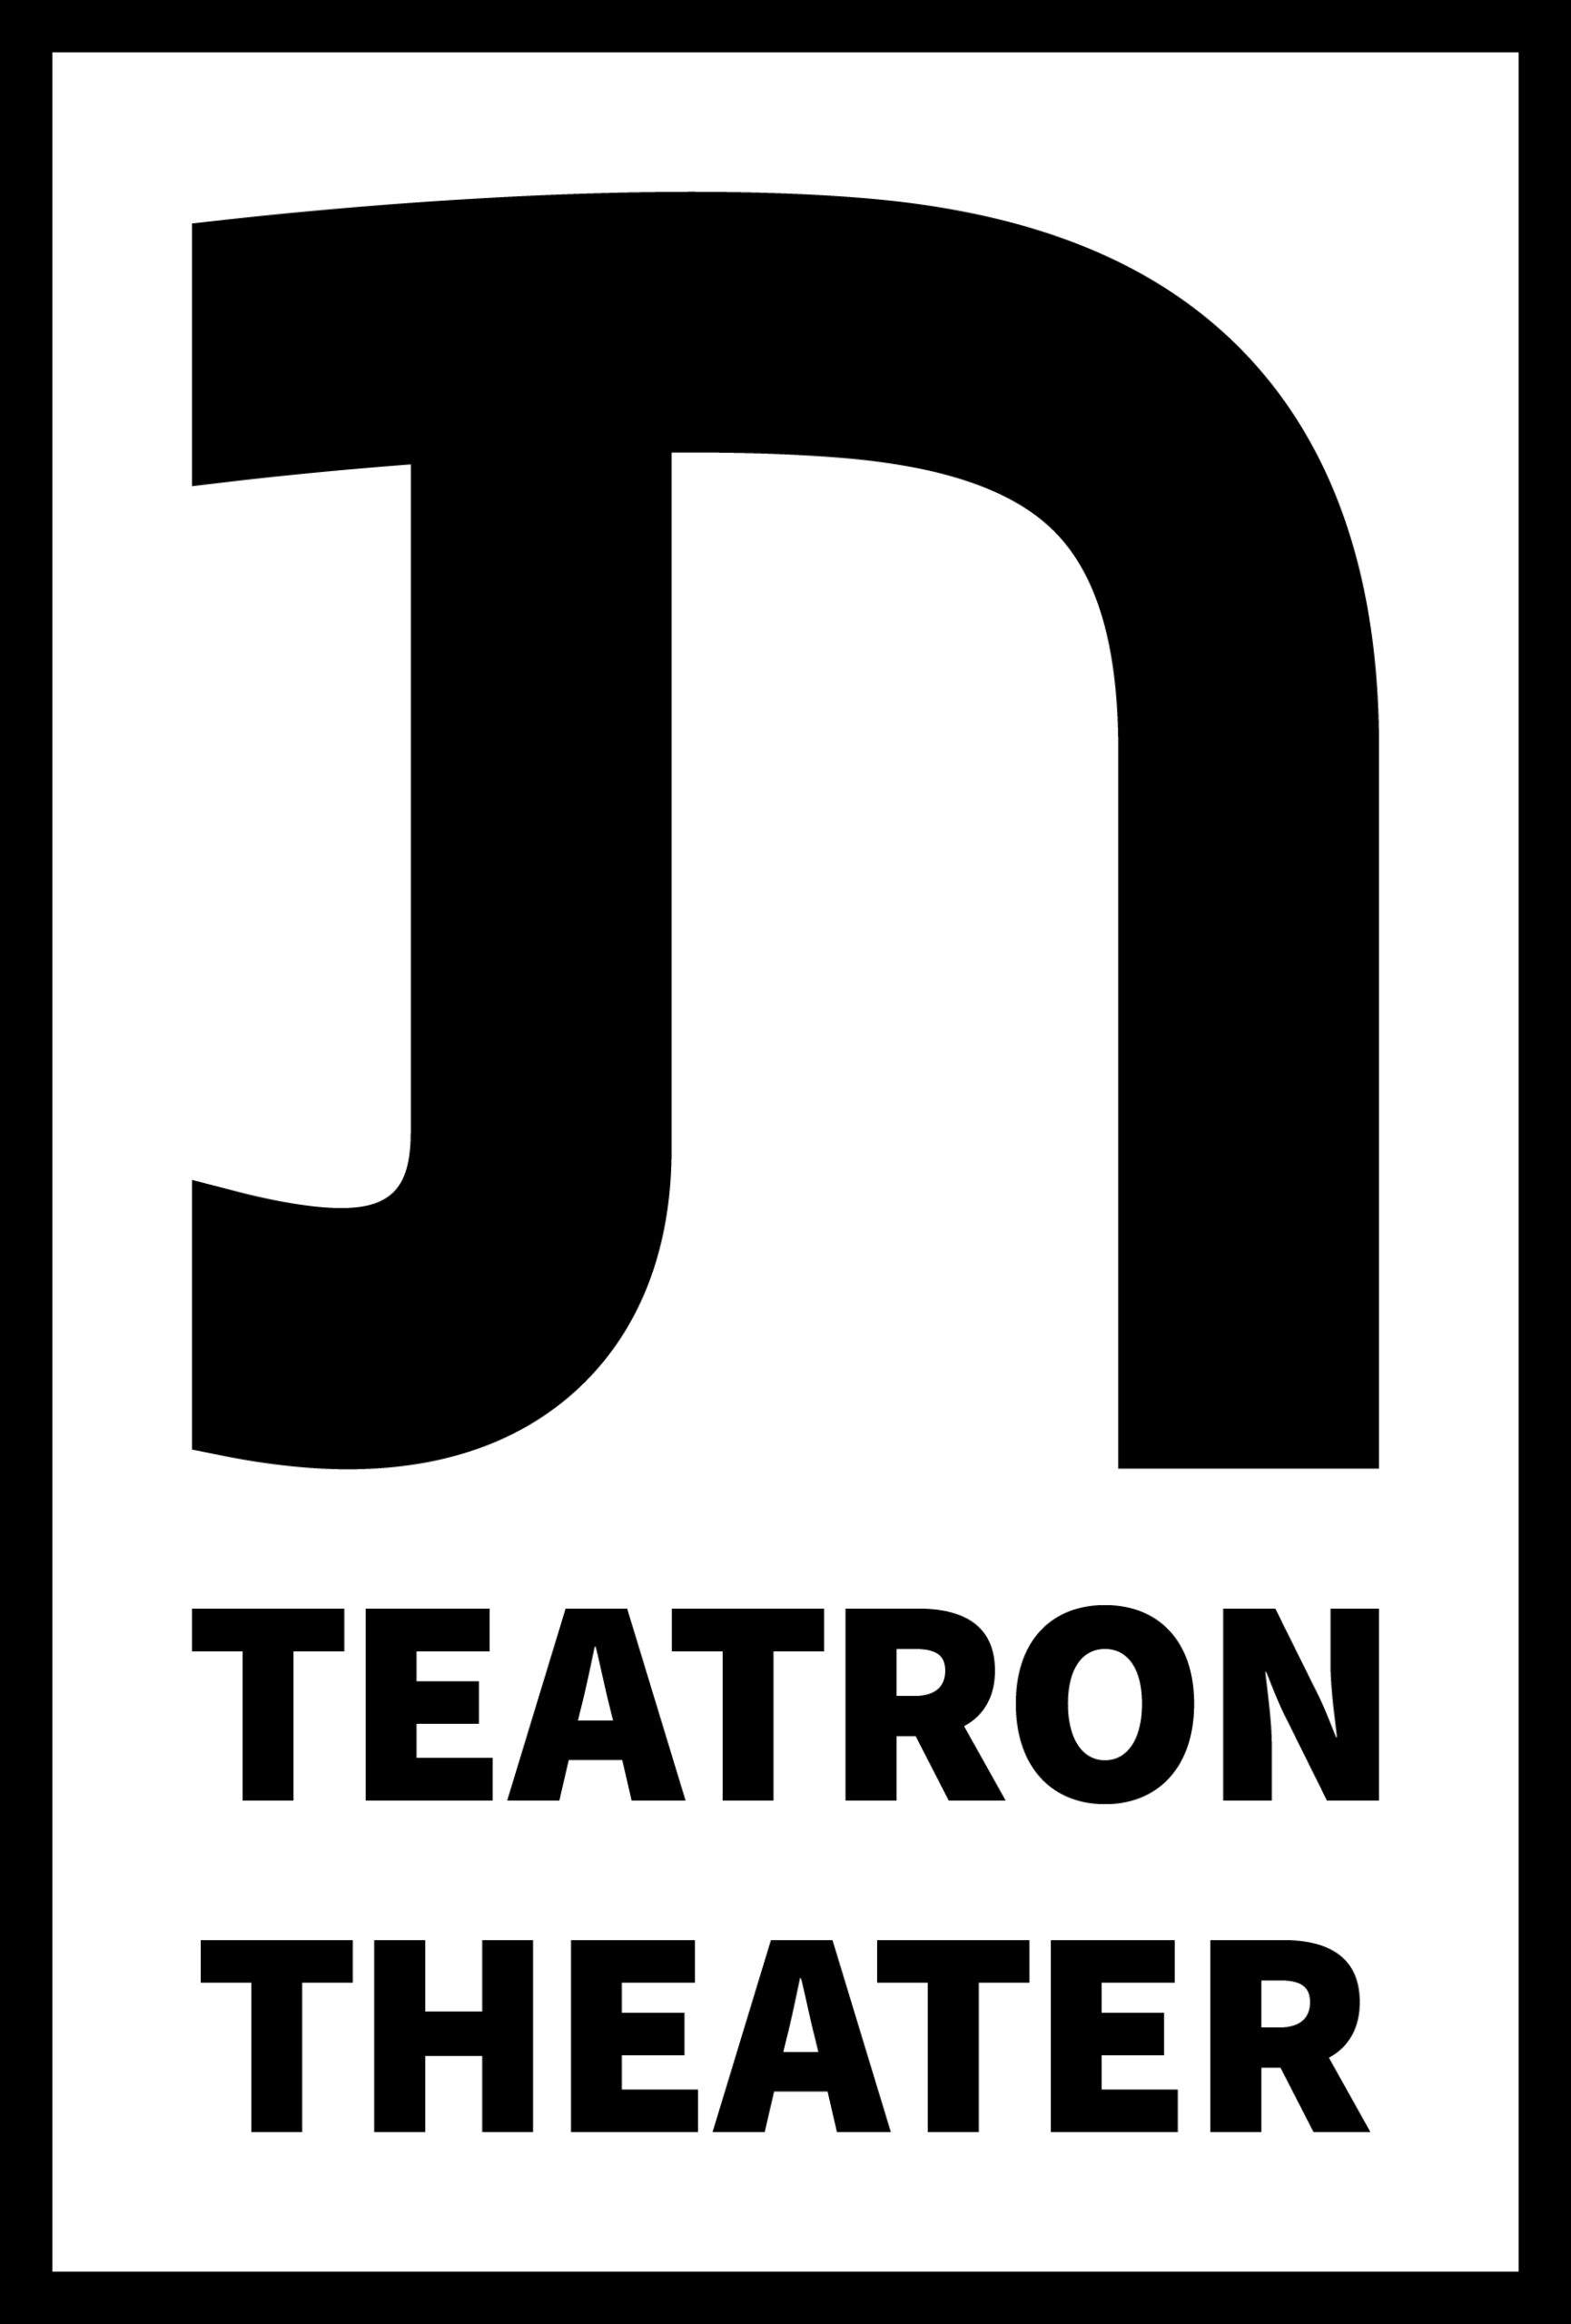 TEATRON-Wortmarke